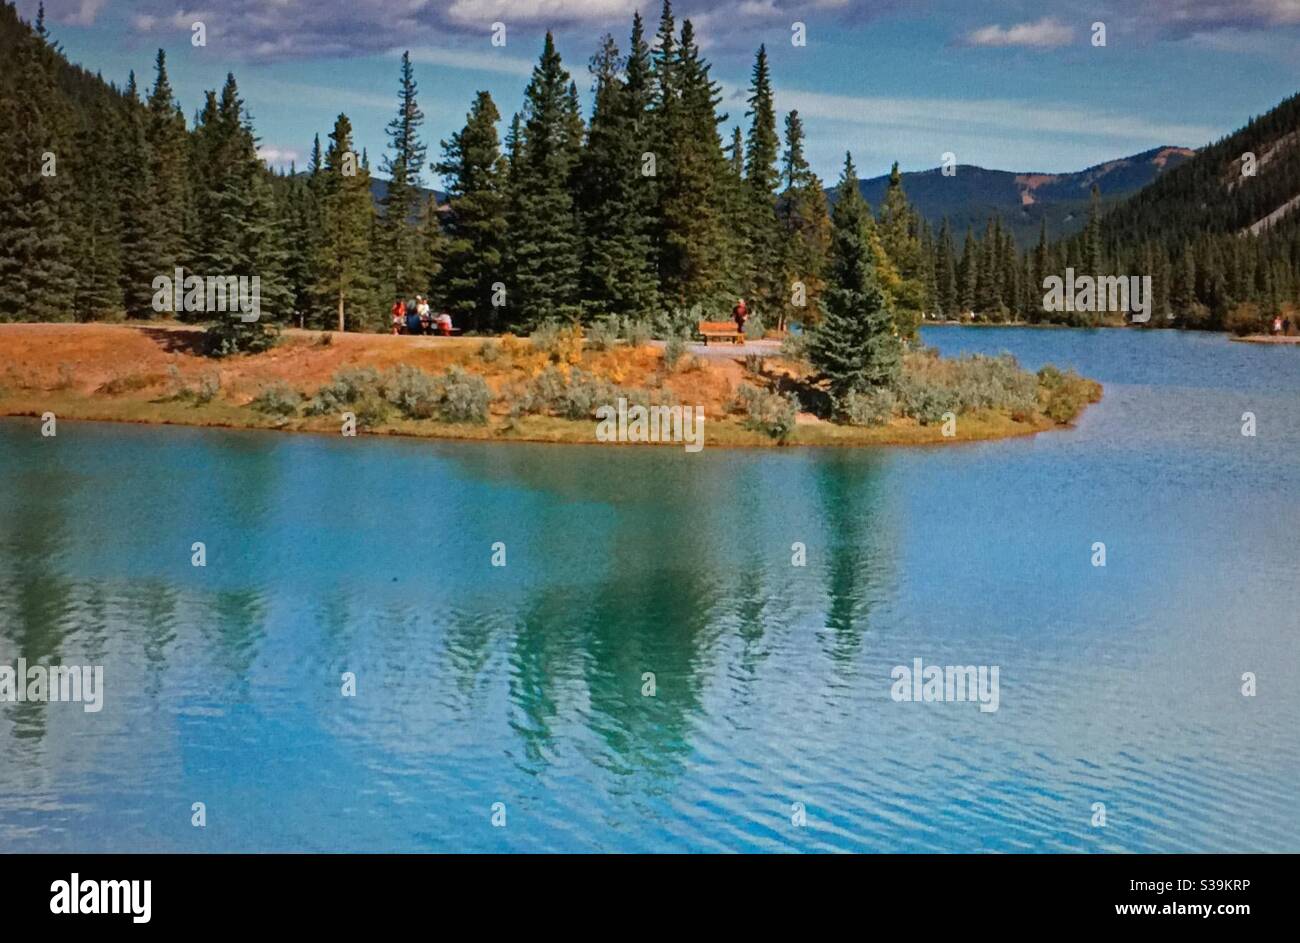 Viajar por Alberta. Canadian Rockies, Forget-me-Not Pond, Kananaskis país, diversión familiar Foto de stock